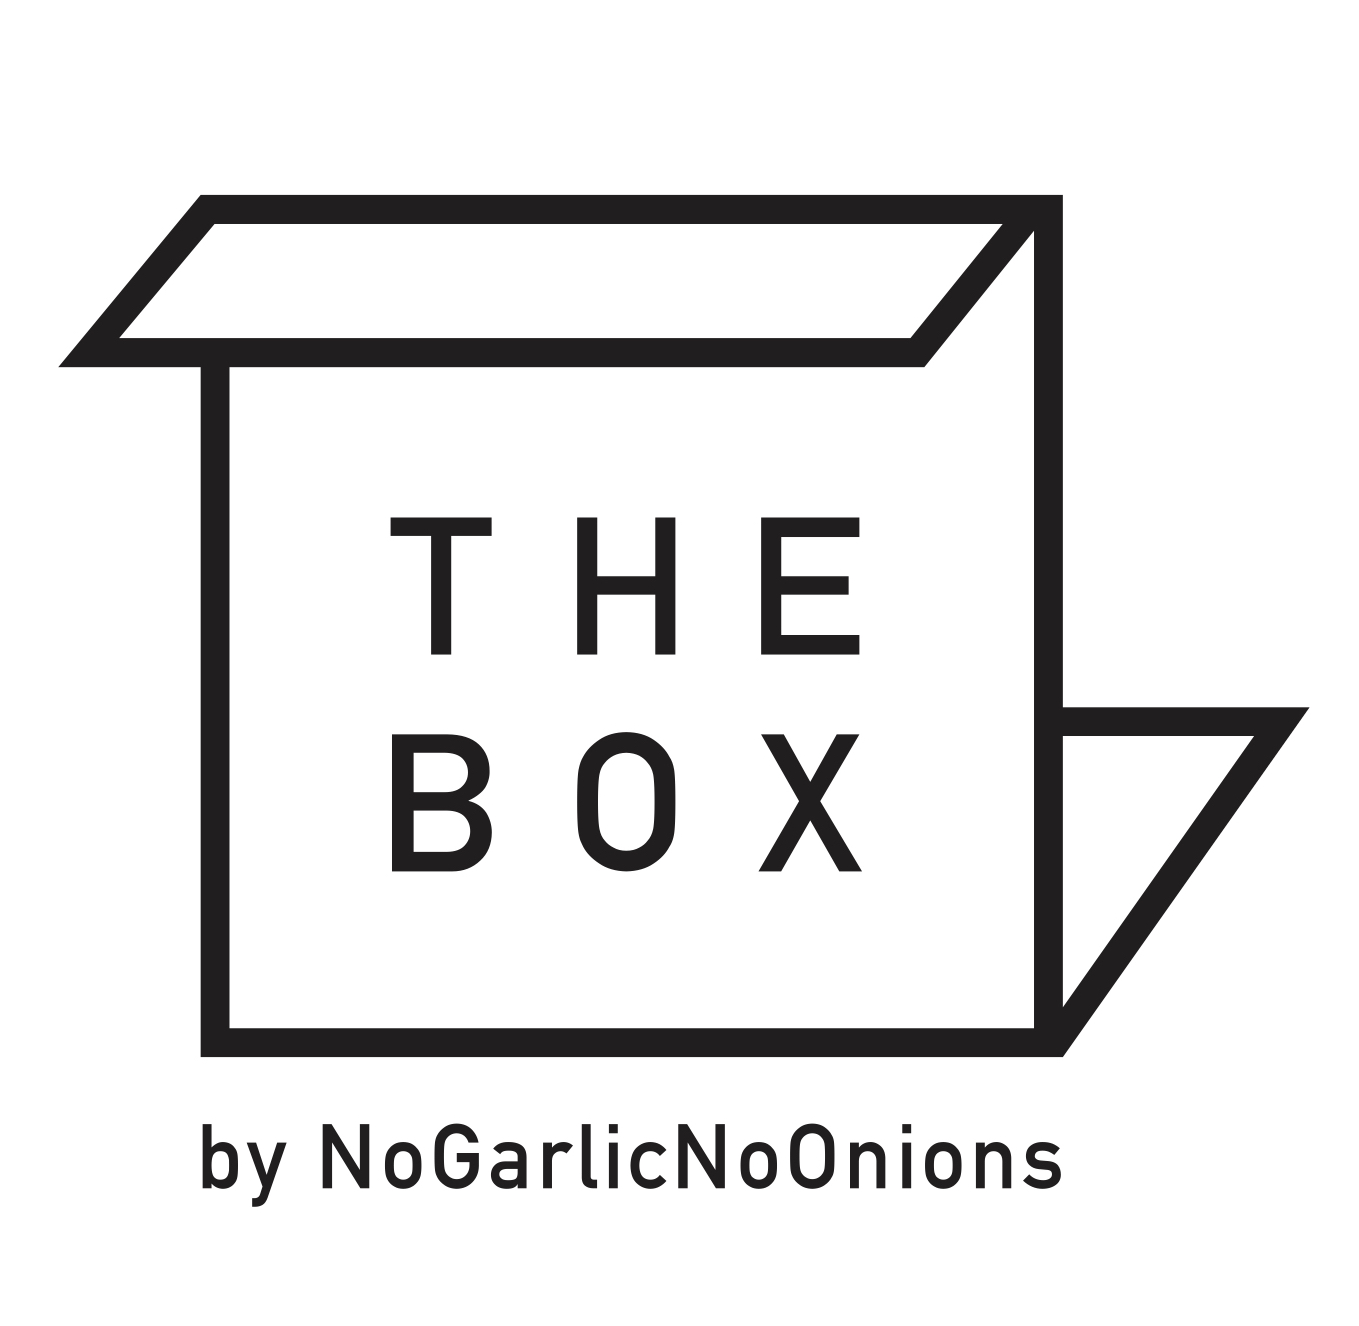 LOGO-THE-BOX